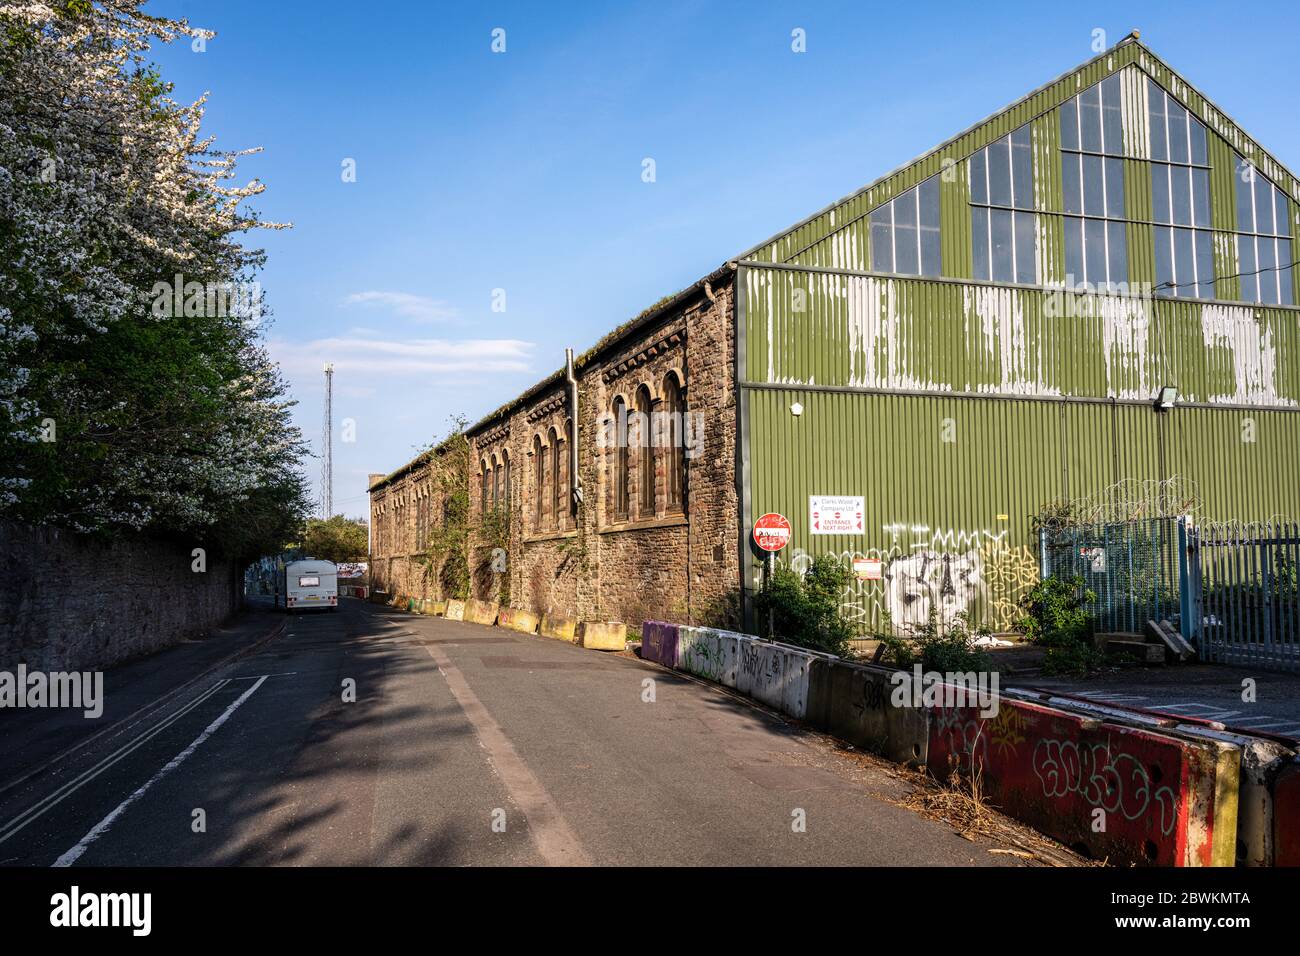 Bristol, England, UK - April 11, 2020: Disused light industrial warehouses await regeneration on Silverthorne Road in Bristol's Temple Quarter Enterpr Stock Photo